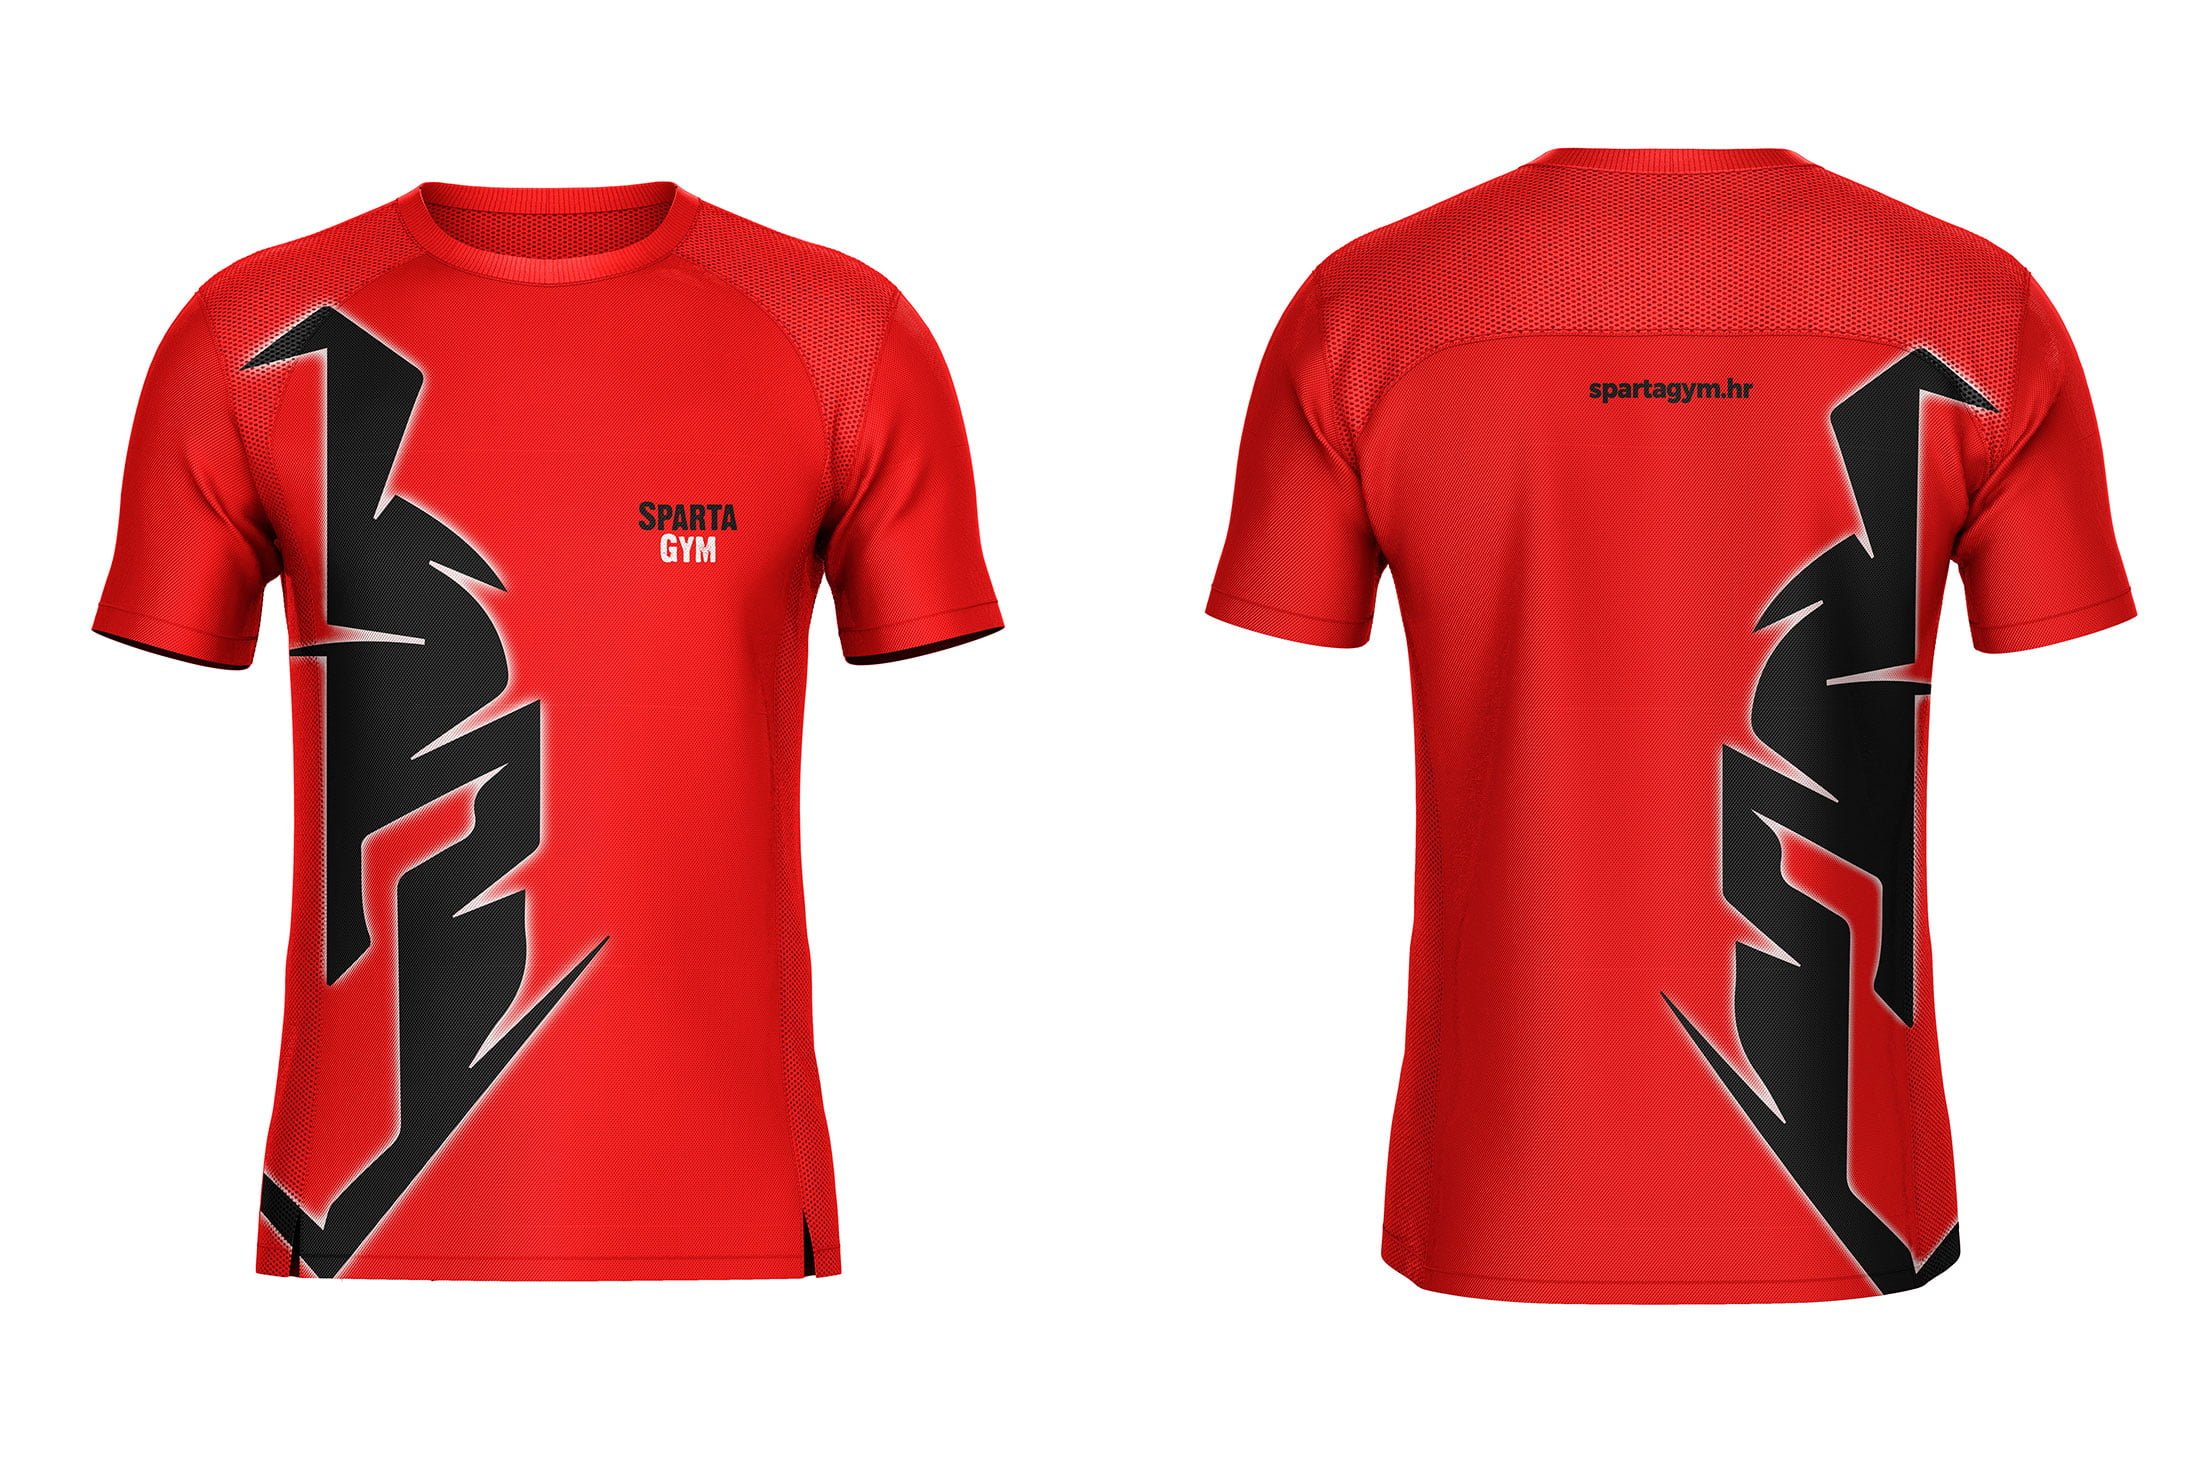 dizajn sparta gym majice crvene